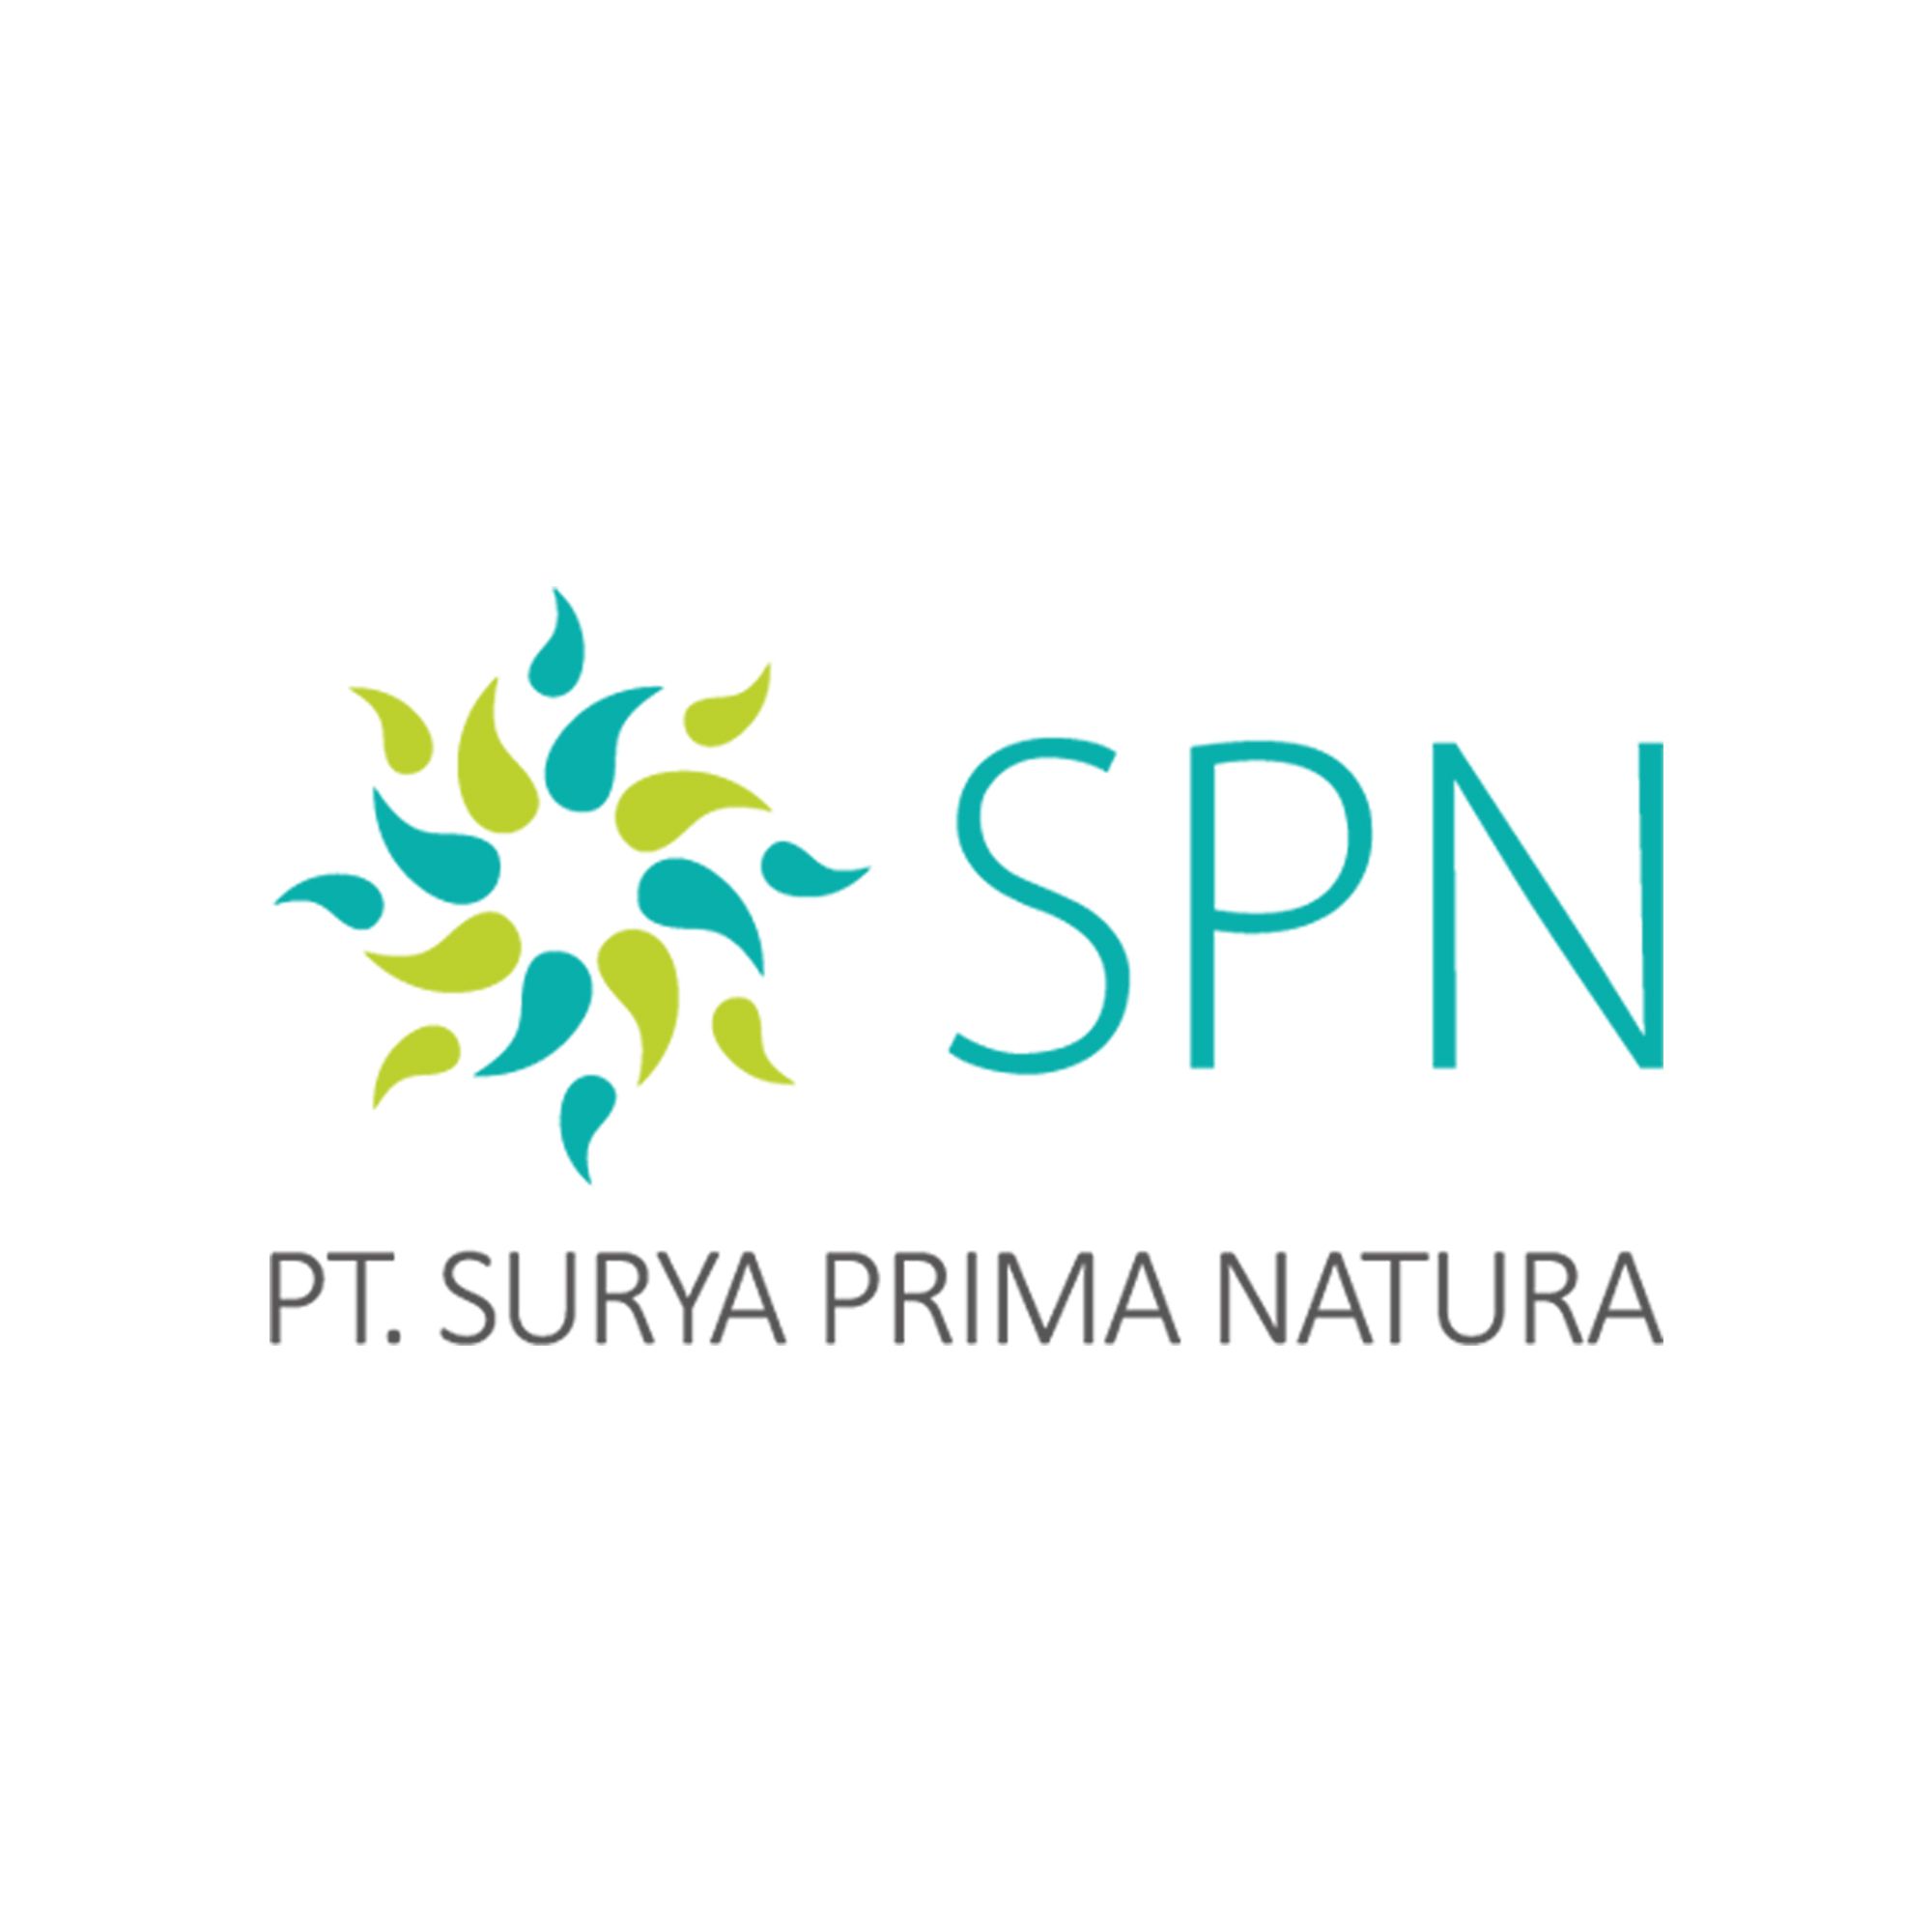 Pt. Surya Prima Natura